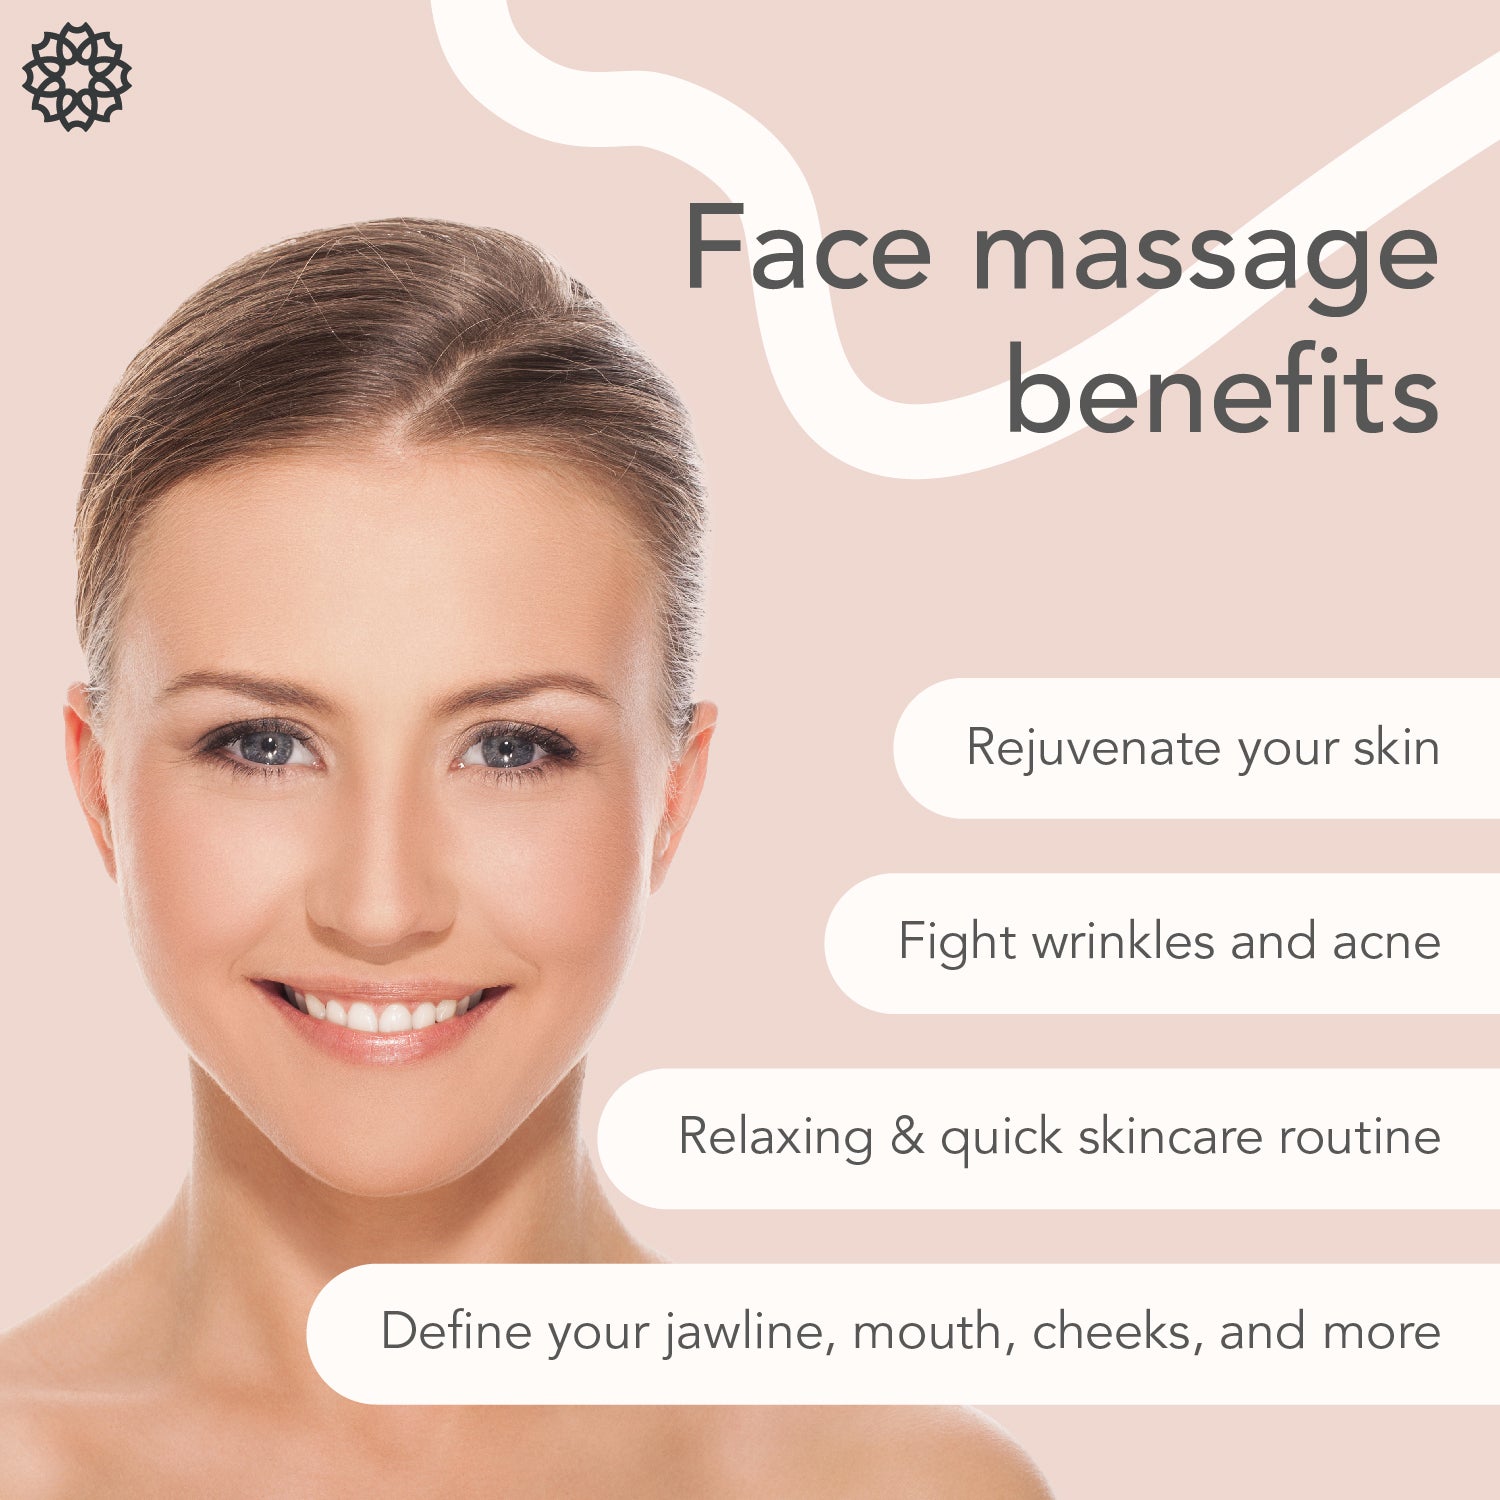 Benefits of face massage